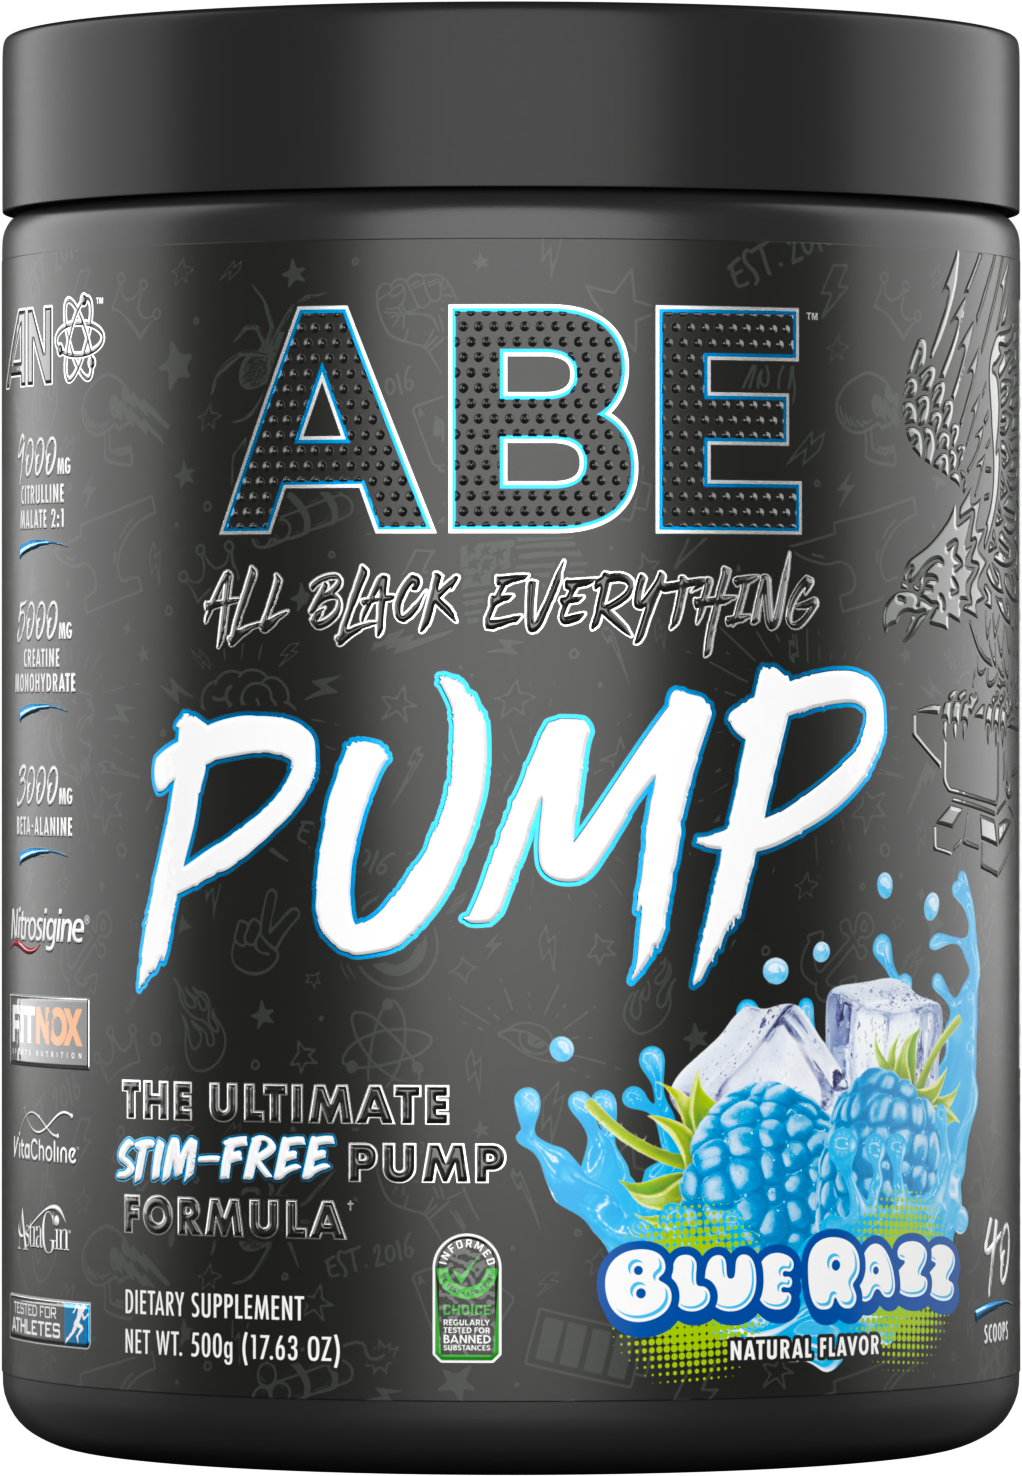 All Black Everything ABE Pump